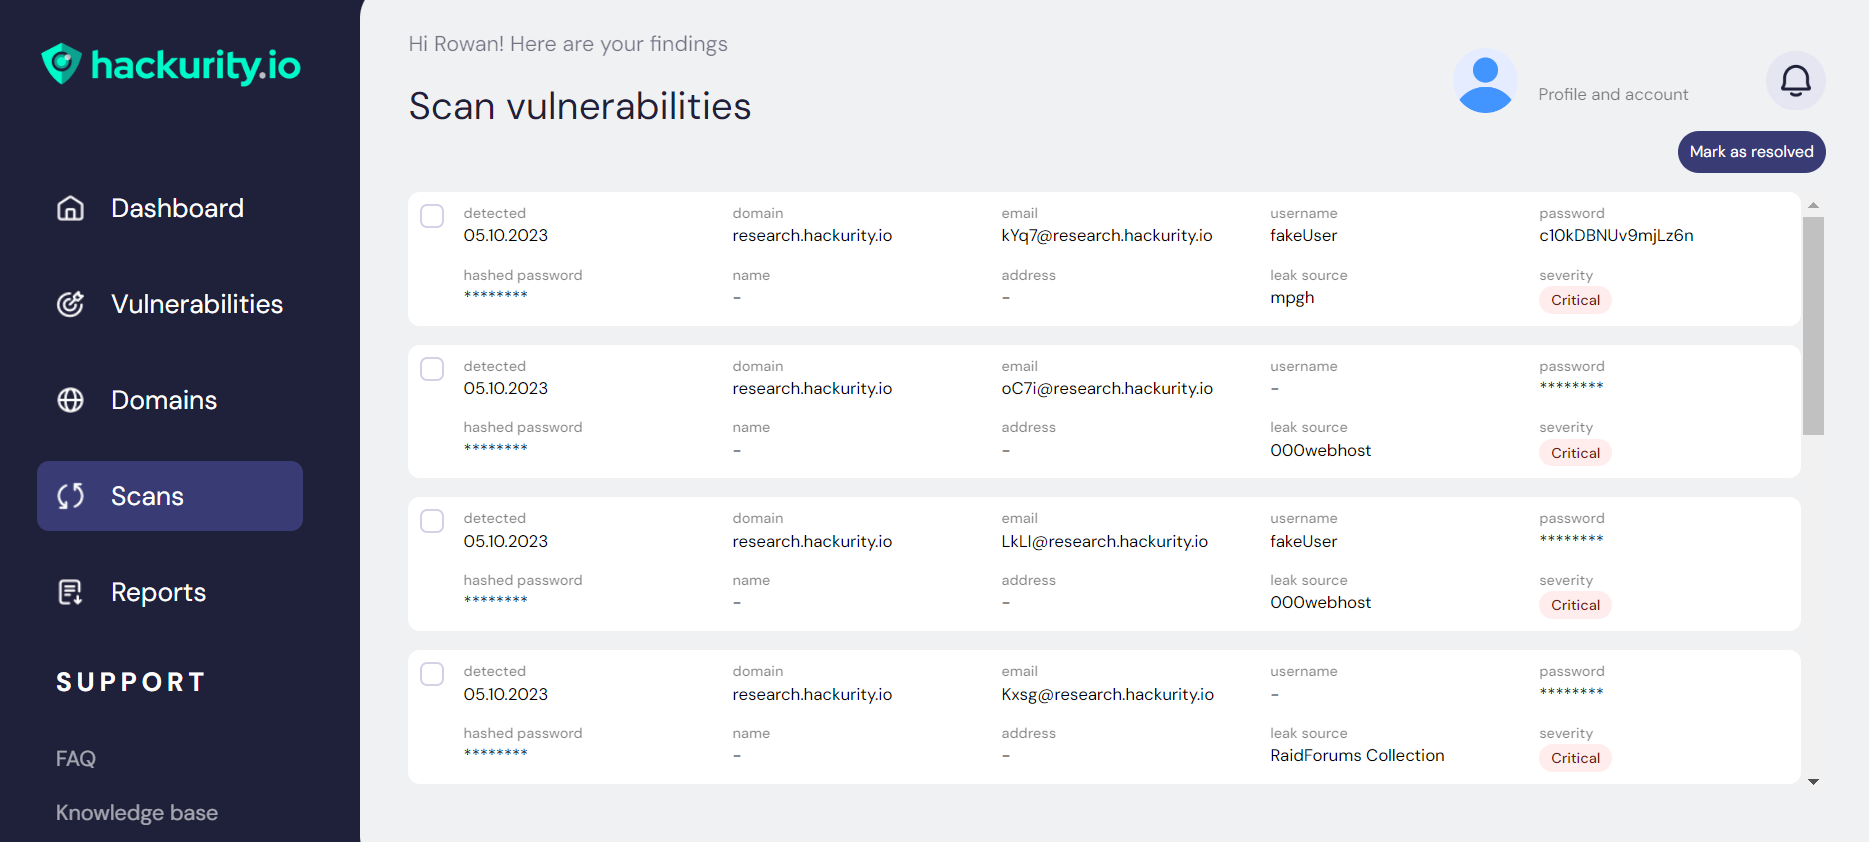 A screenshot of the Hackurity portal scan vulnerabilities